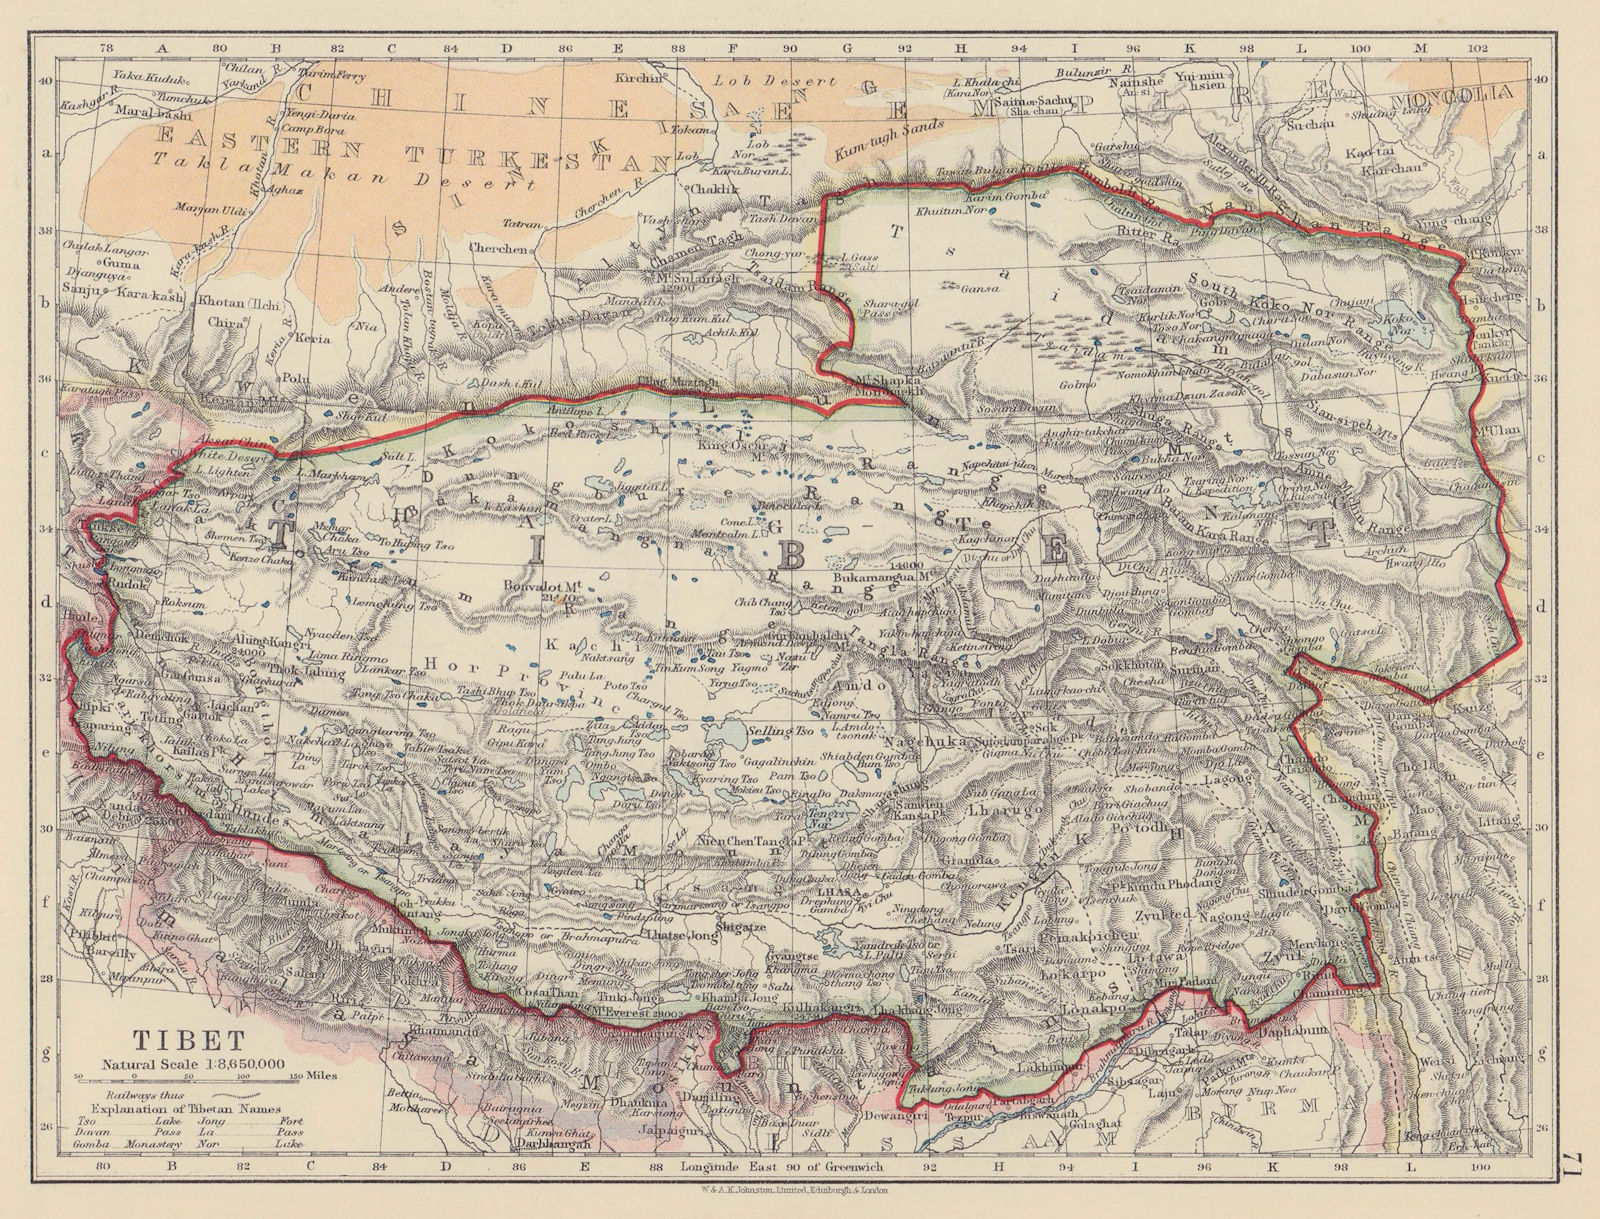 TIBET. Lhasa Chang Tang Himalayas Taklamakan desert. JOHNSTON 1910 old map